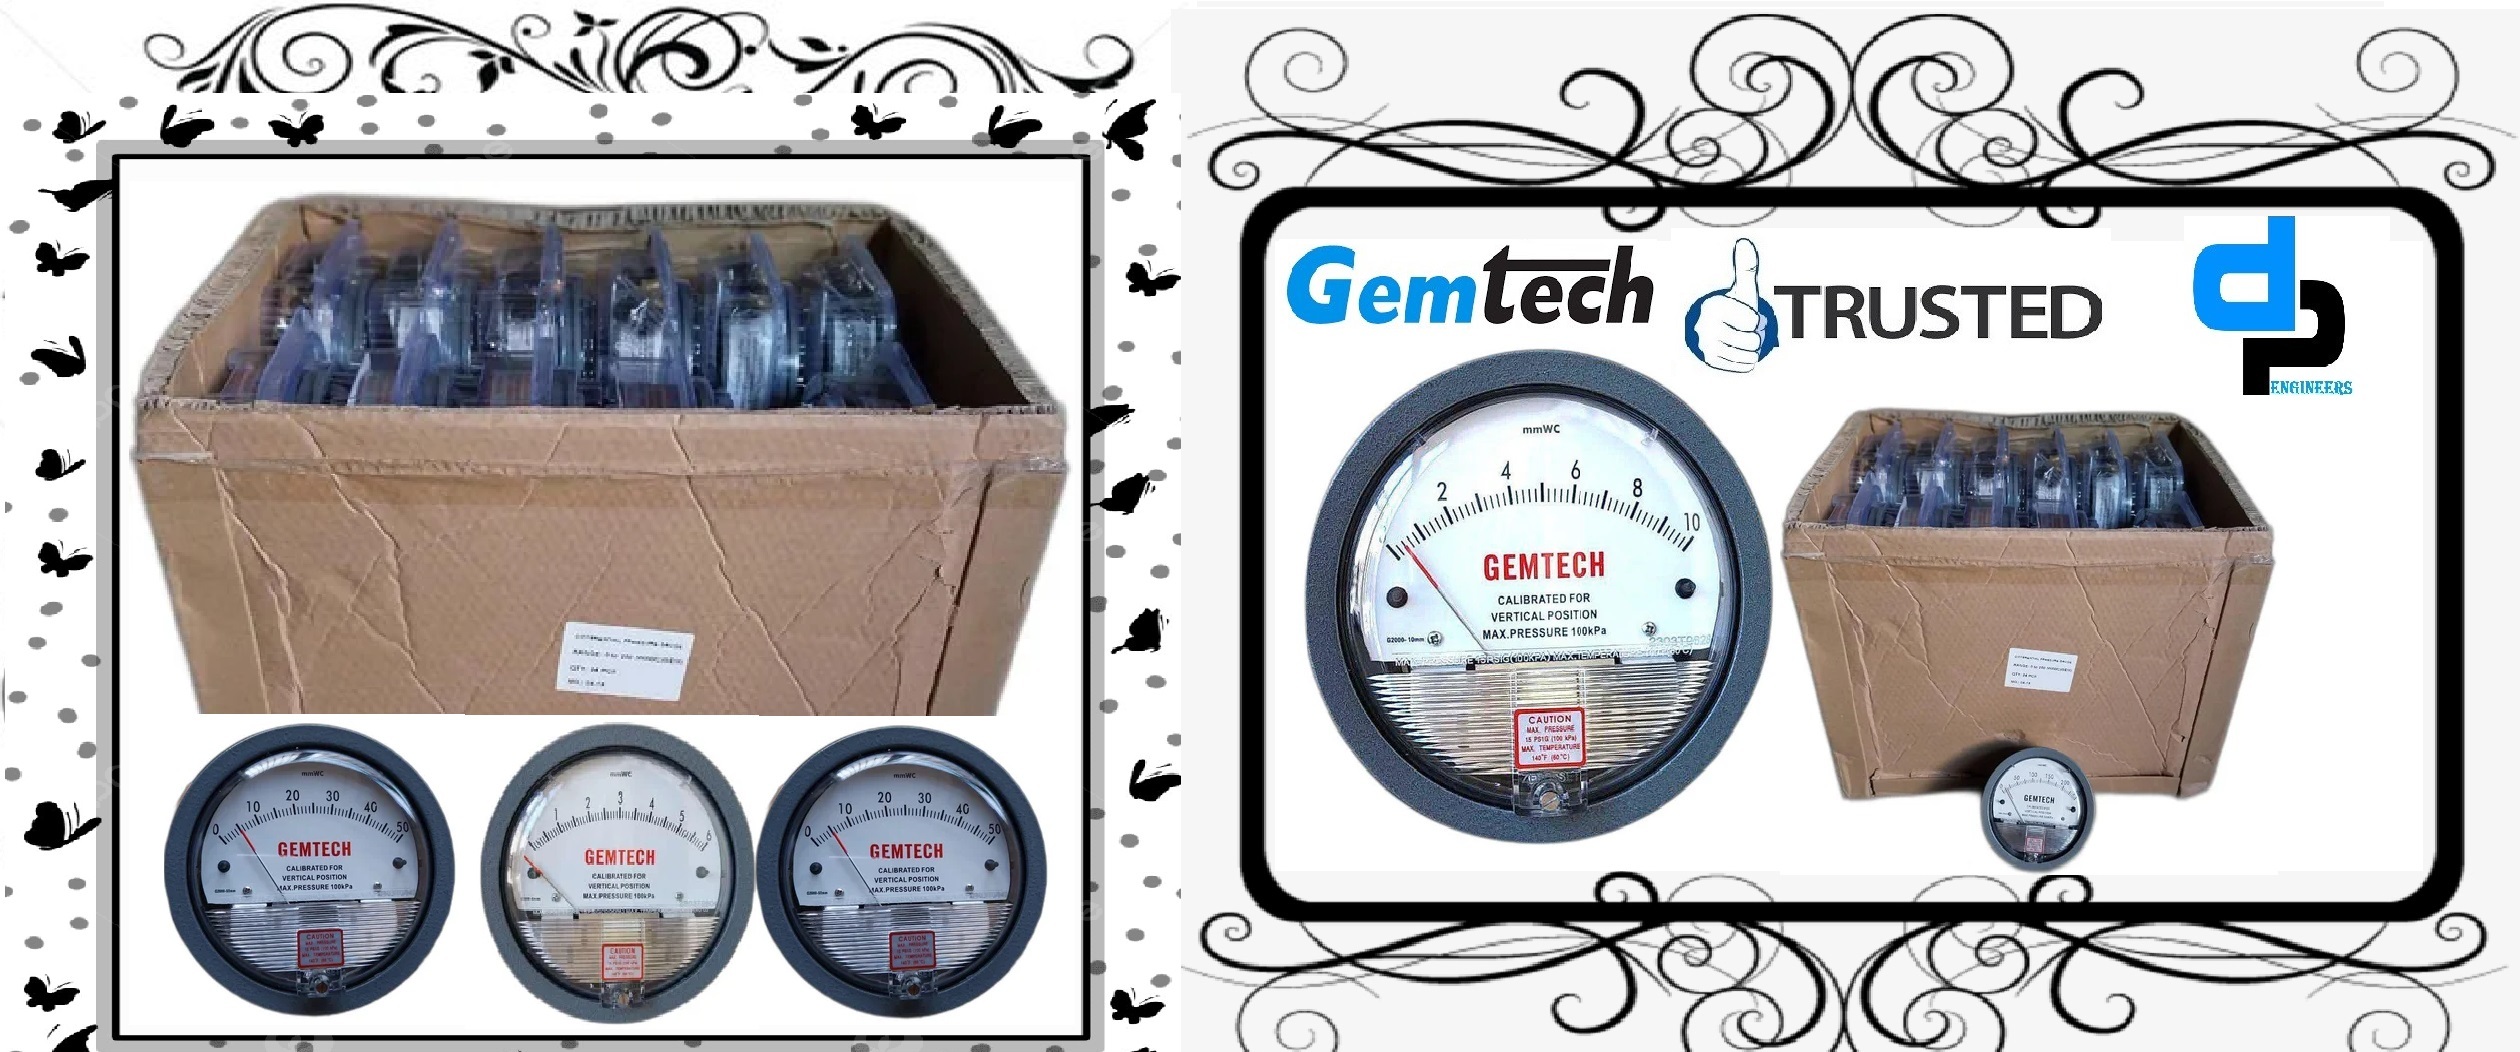 GEMTECH Series G2000-250 MM - Differential Pressure Gauges Range : 0 to 250 MM WC